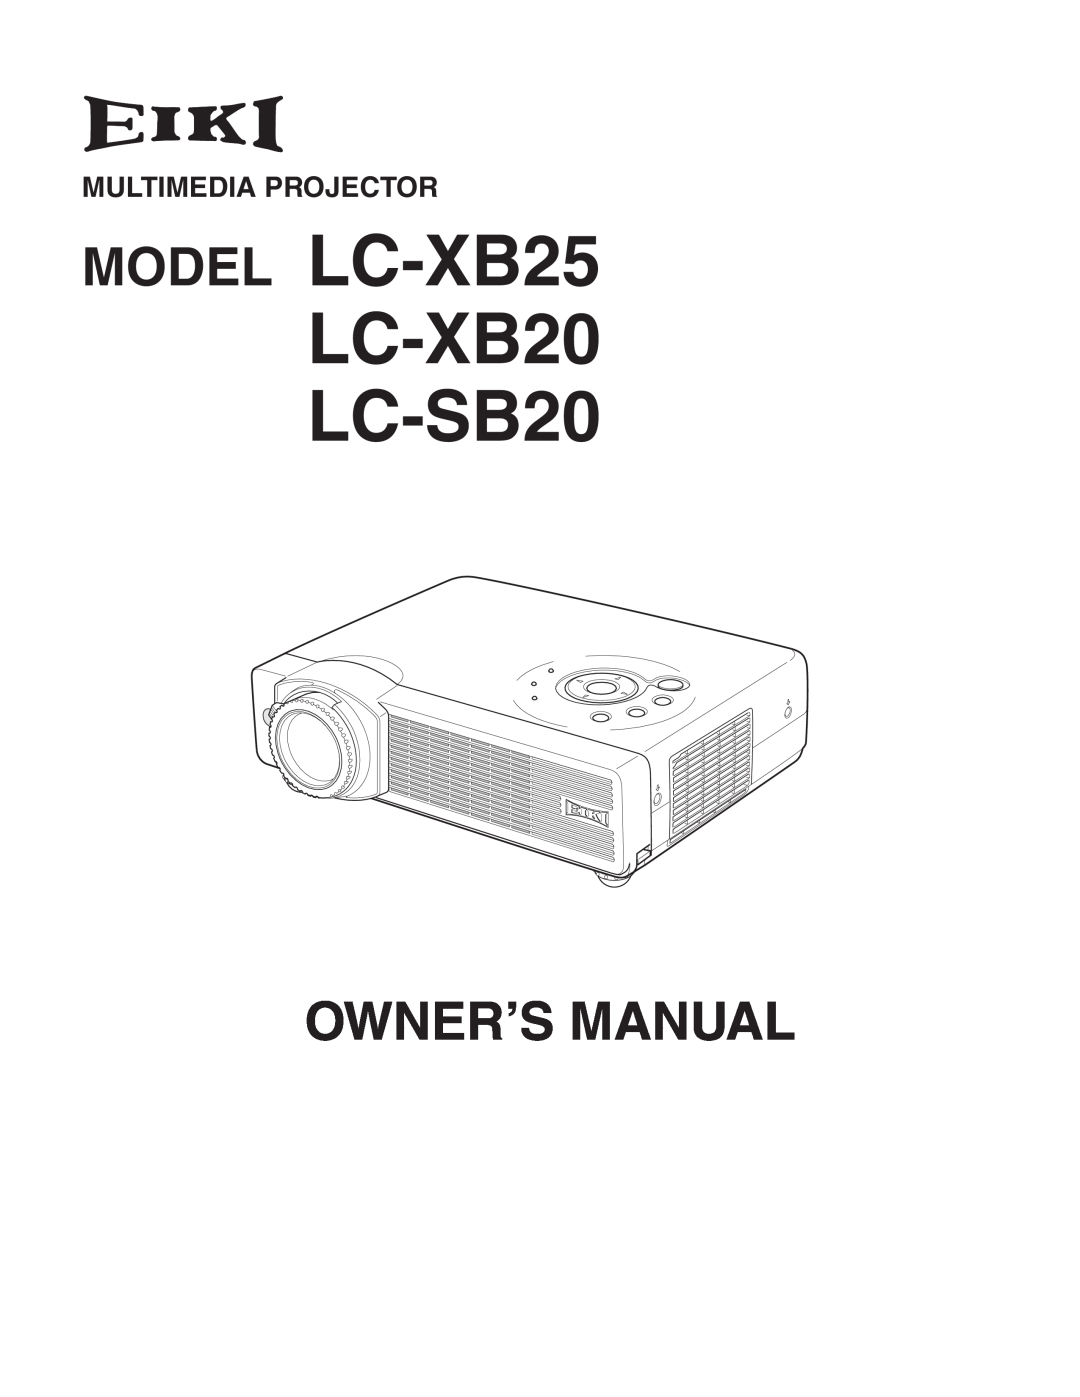 Eiki owner manual MODEL LC-XB25 LC-XB20 LC-SB20, Multimedia Projector 